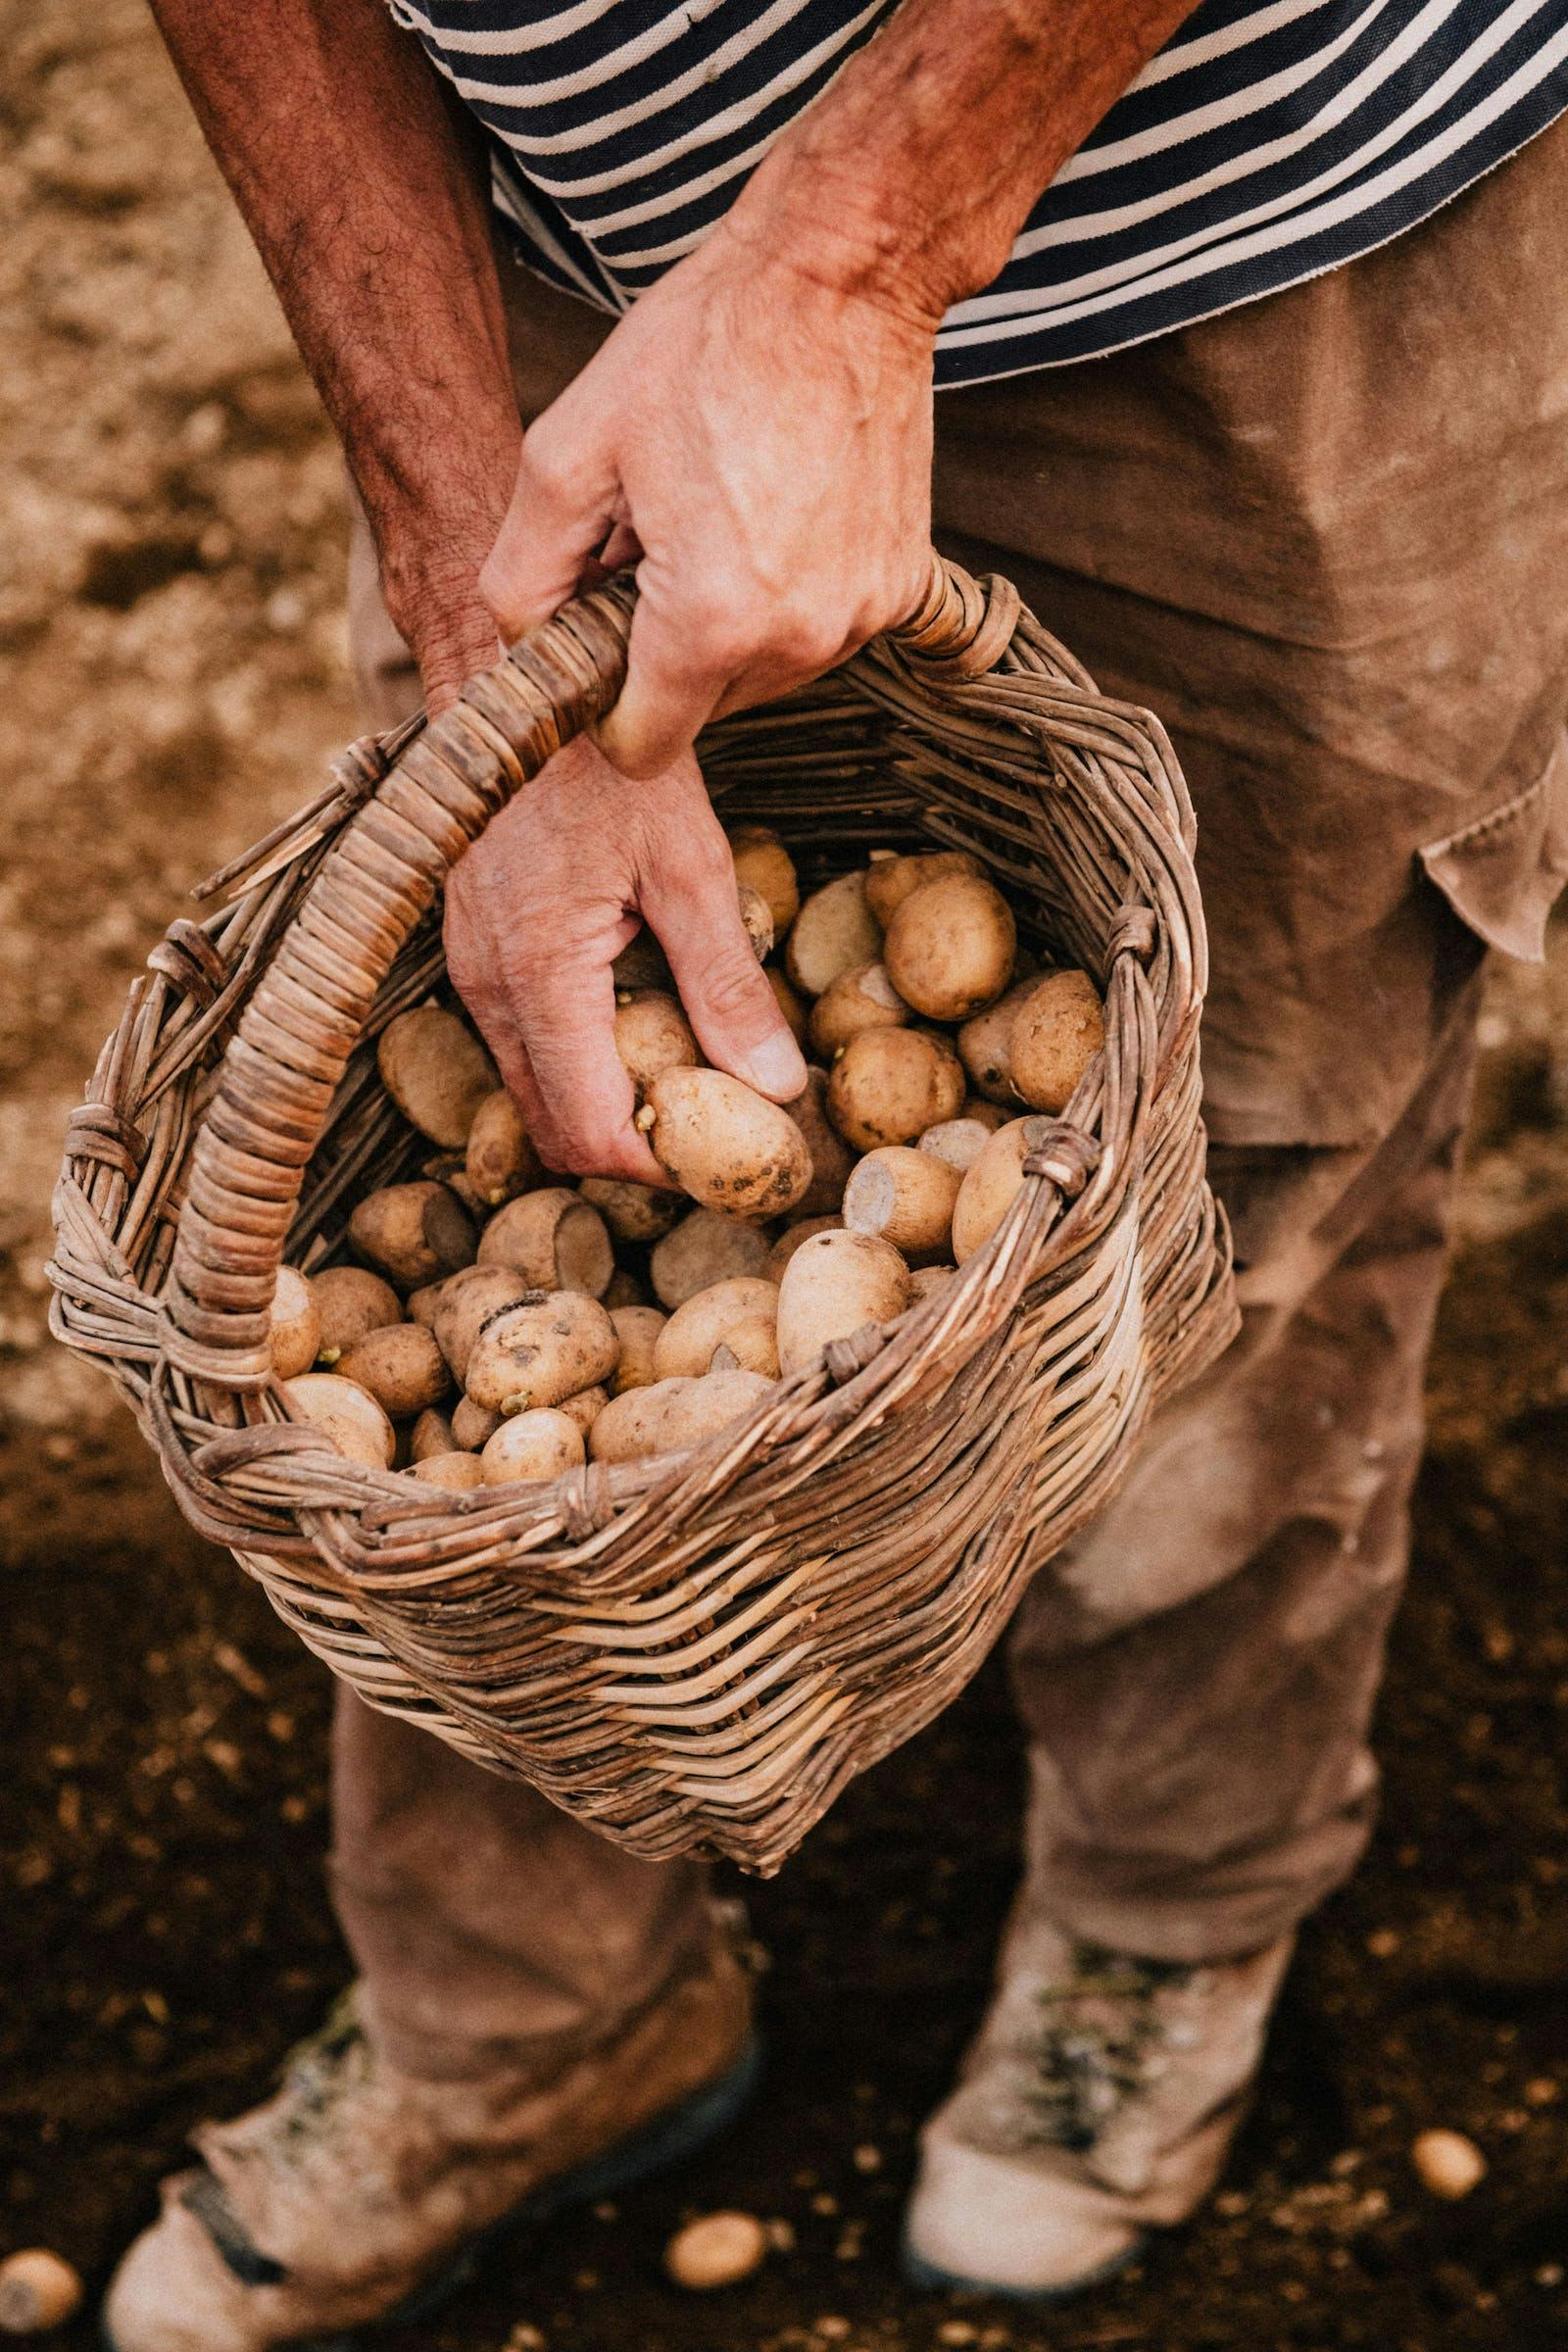 A farmer planting potatoes